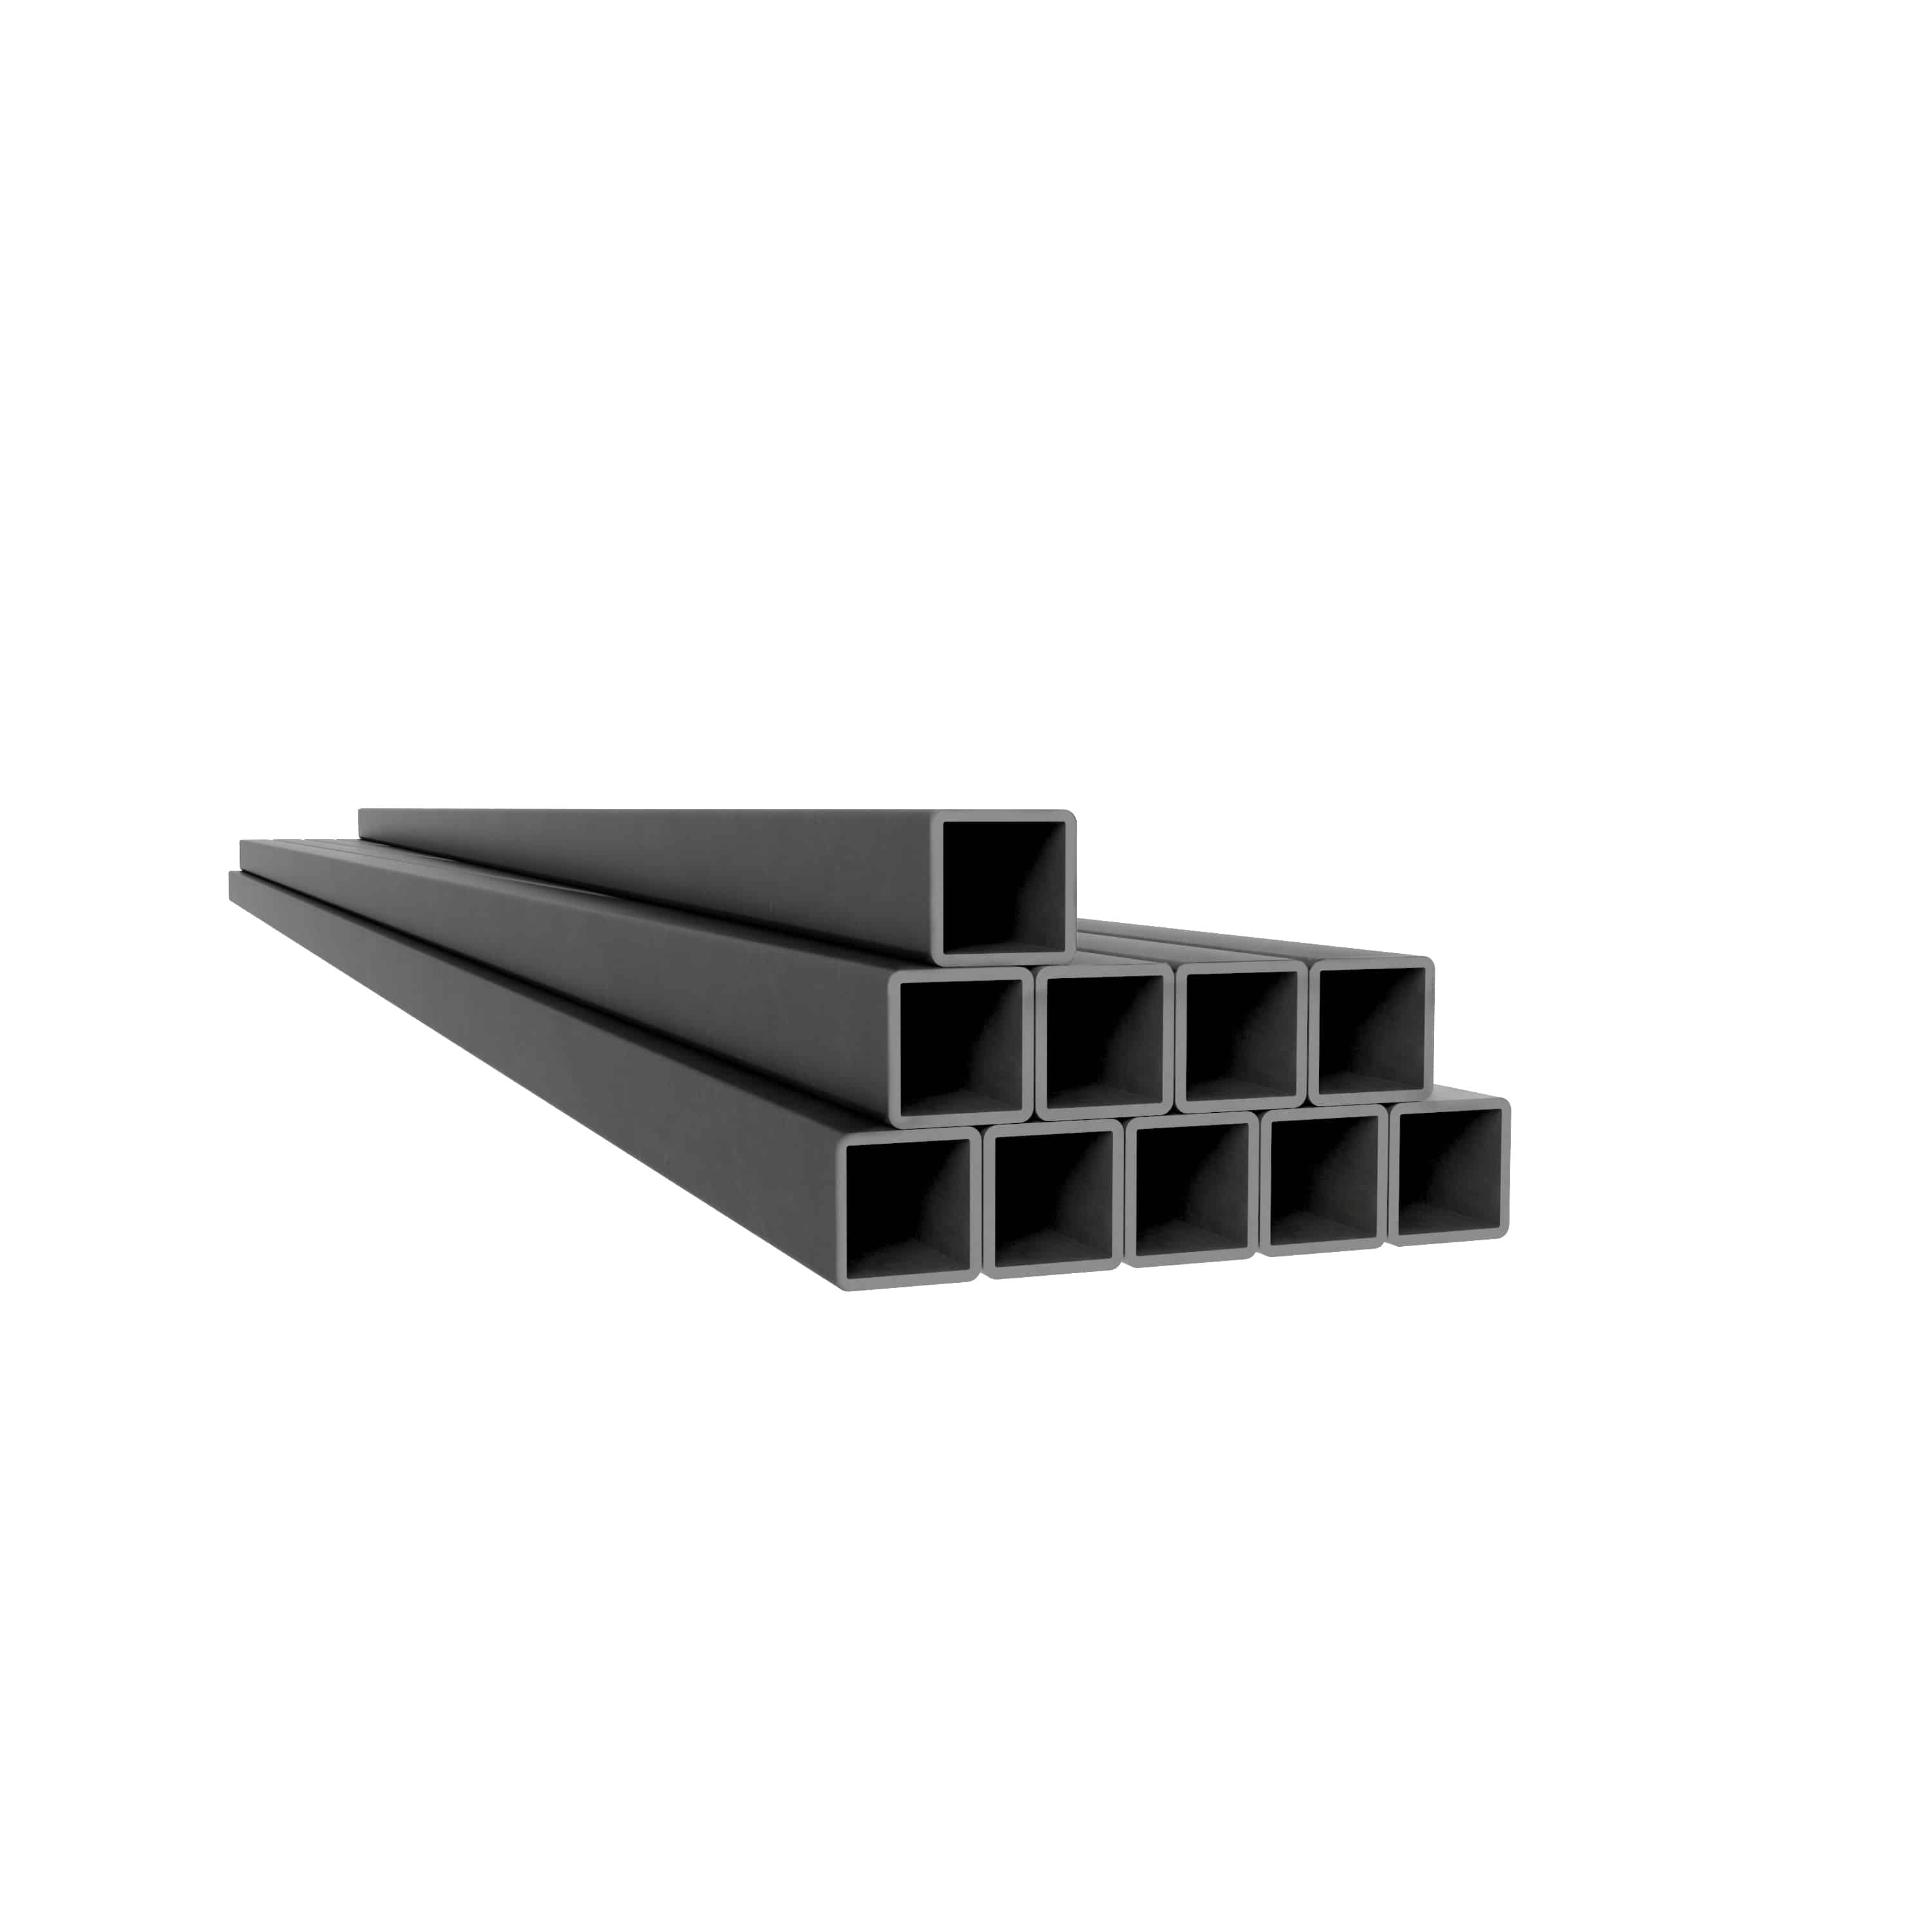 Square Pipe - Square pipe 80 x 80 x 4 mm S235-6LM, https:maxbau.ro